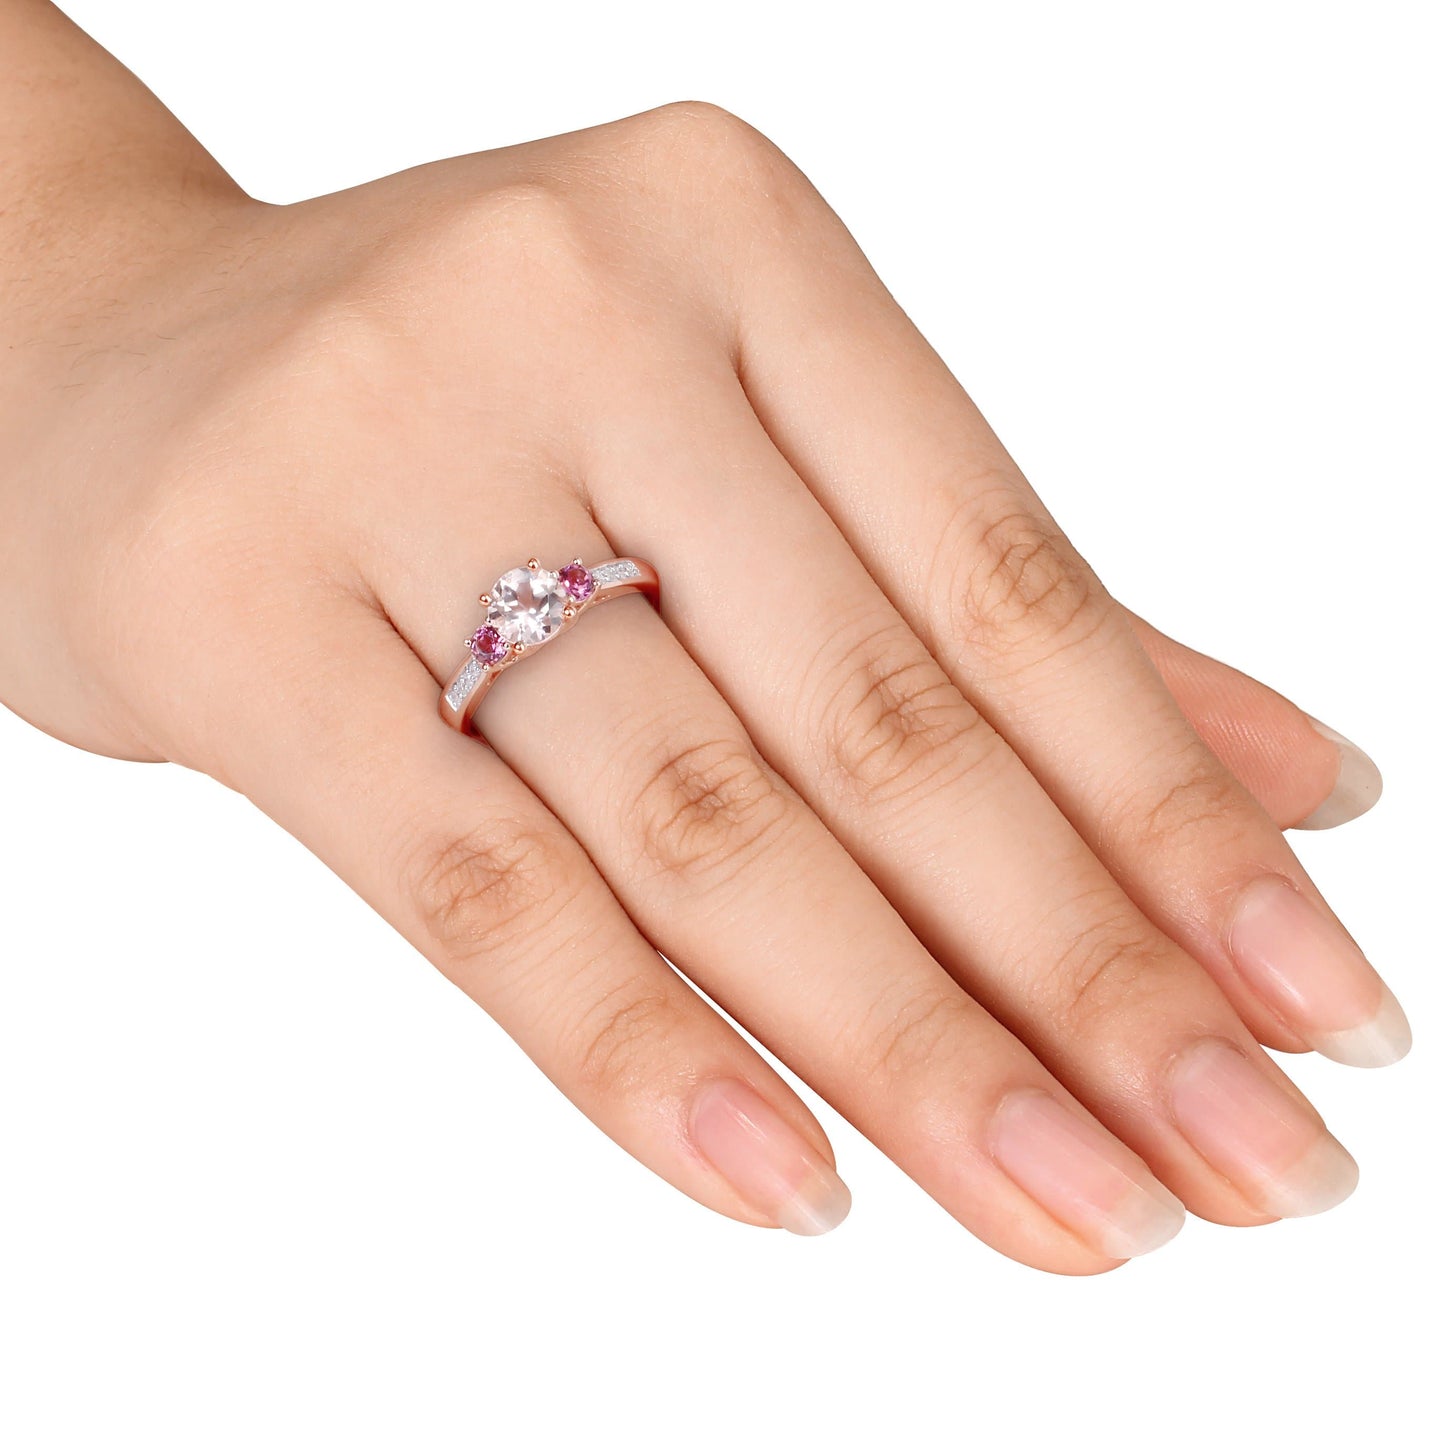 Sophia B 1ctMorganite & Tourmaline Ring with Diamond Accents